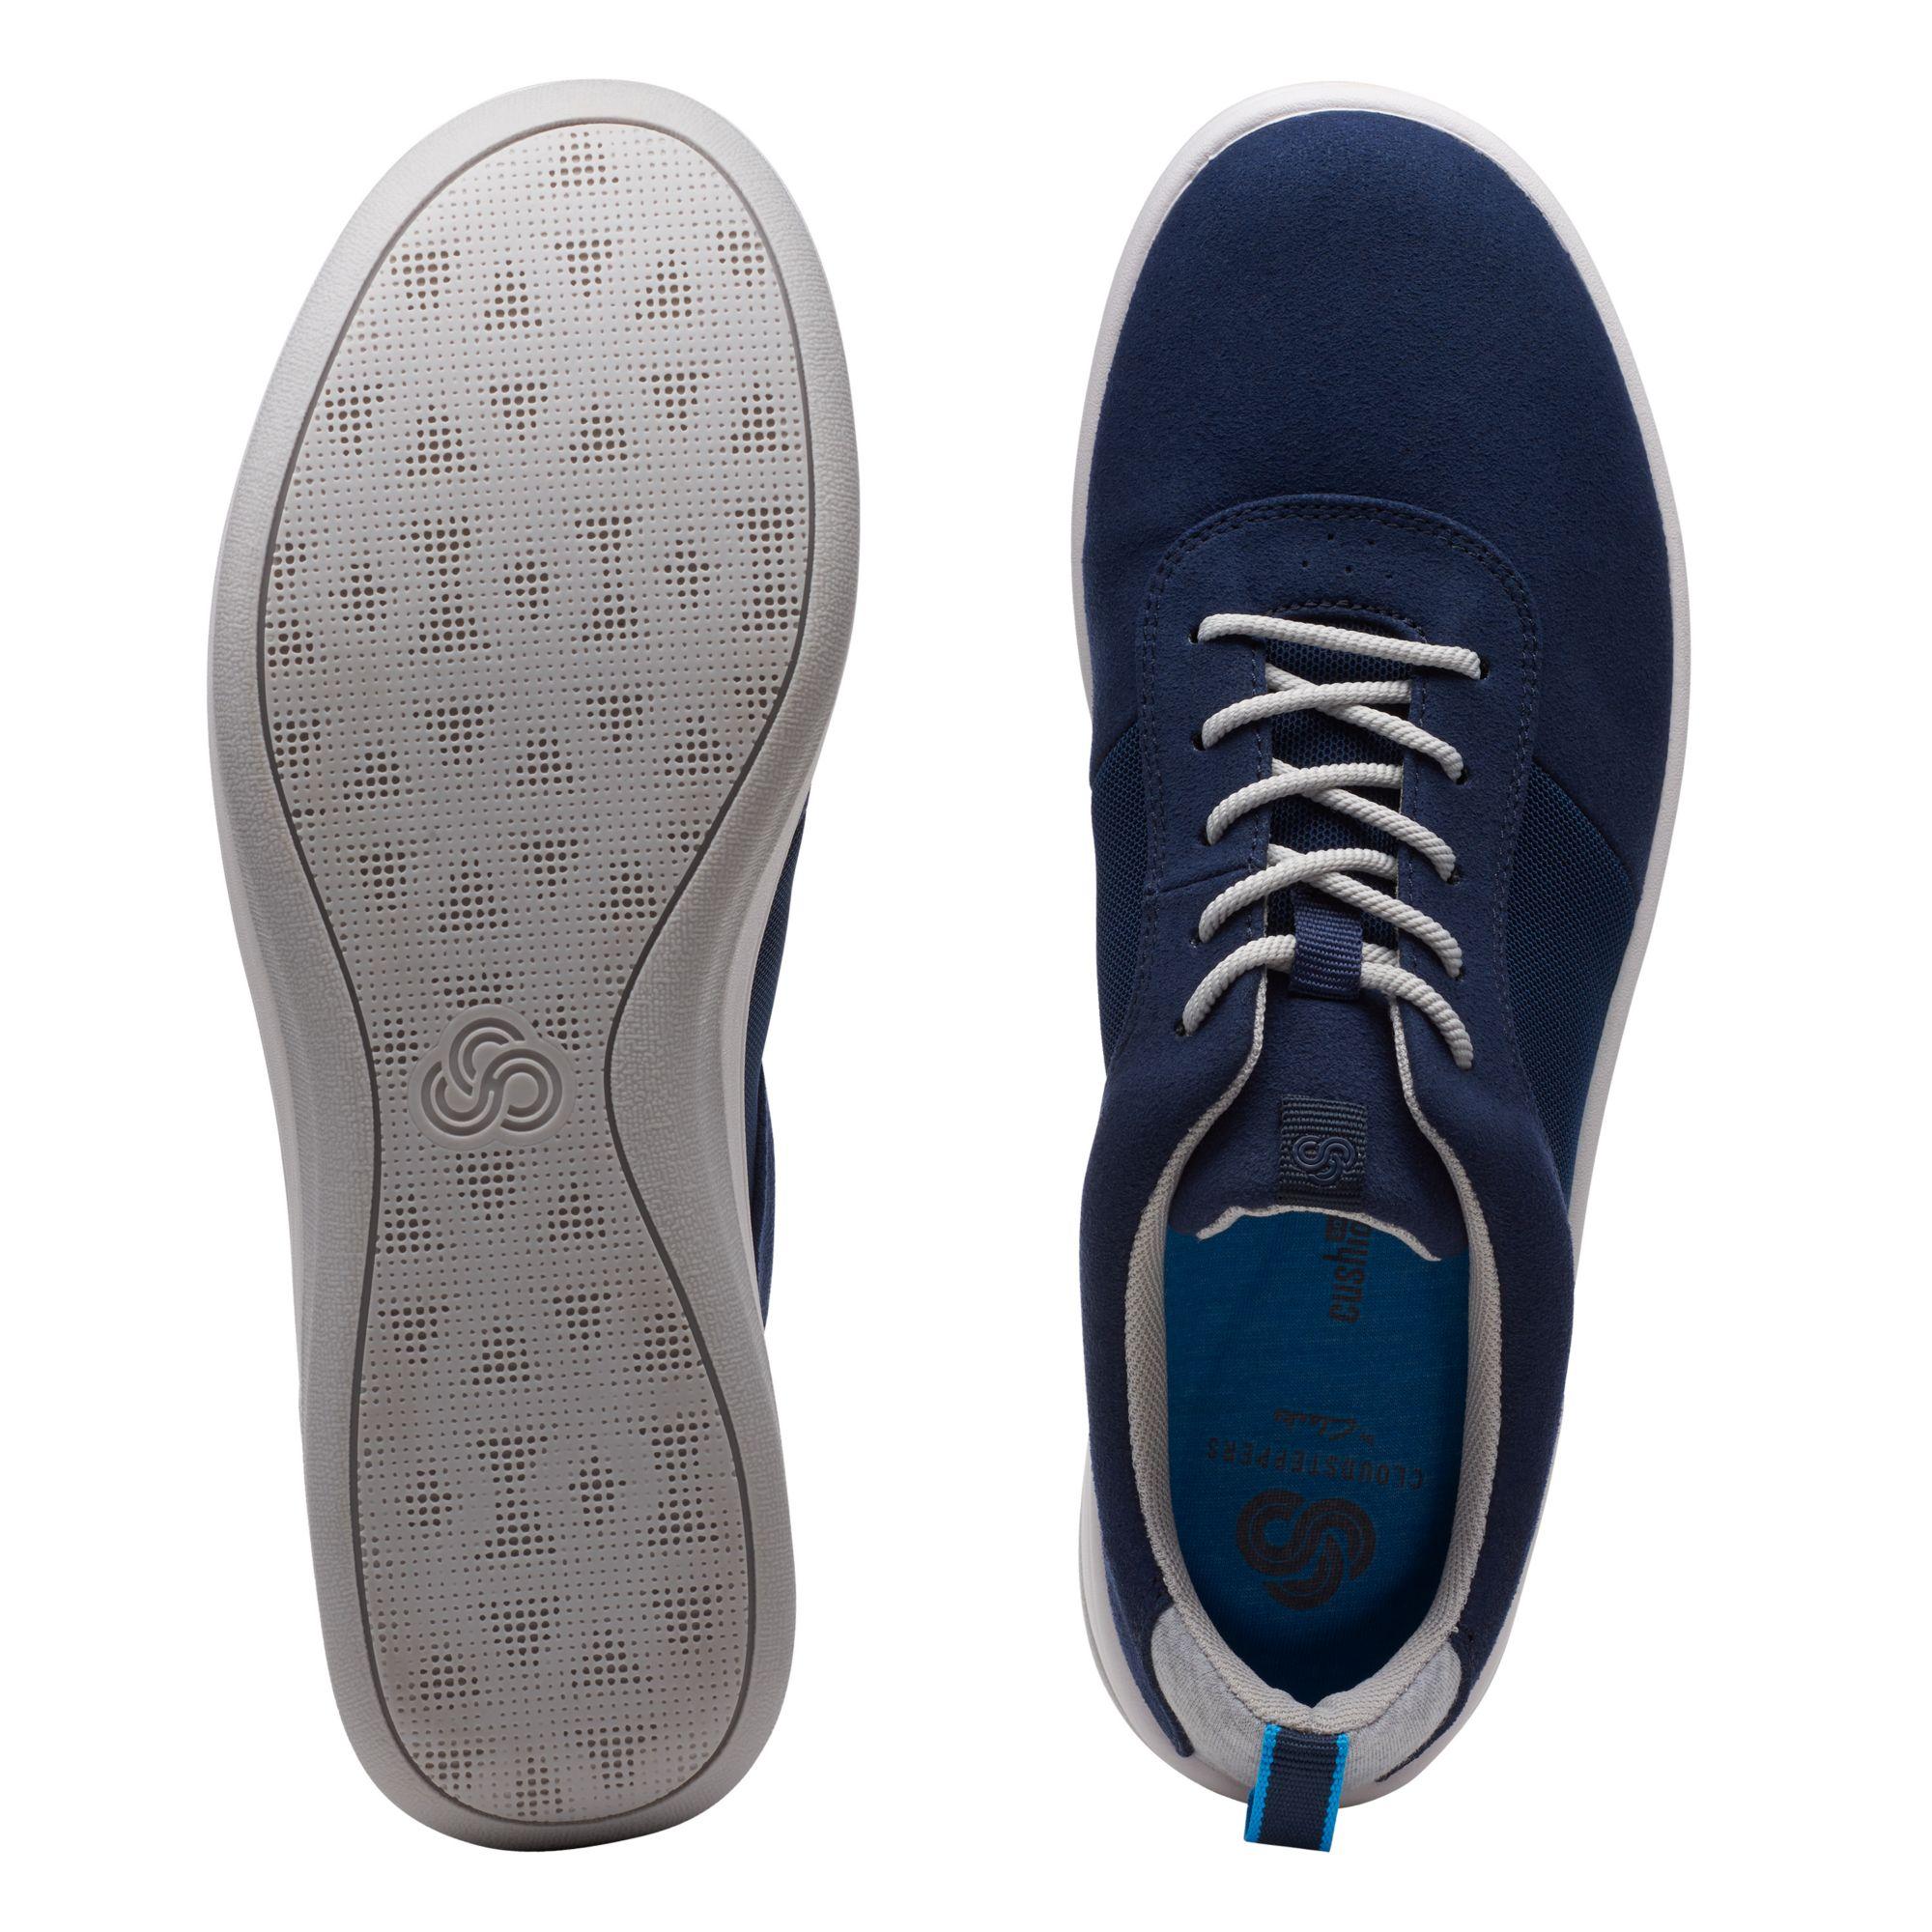 Clarks Arla Step Casual Sneakers in Navy (Blue) - Lyst